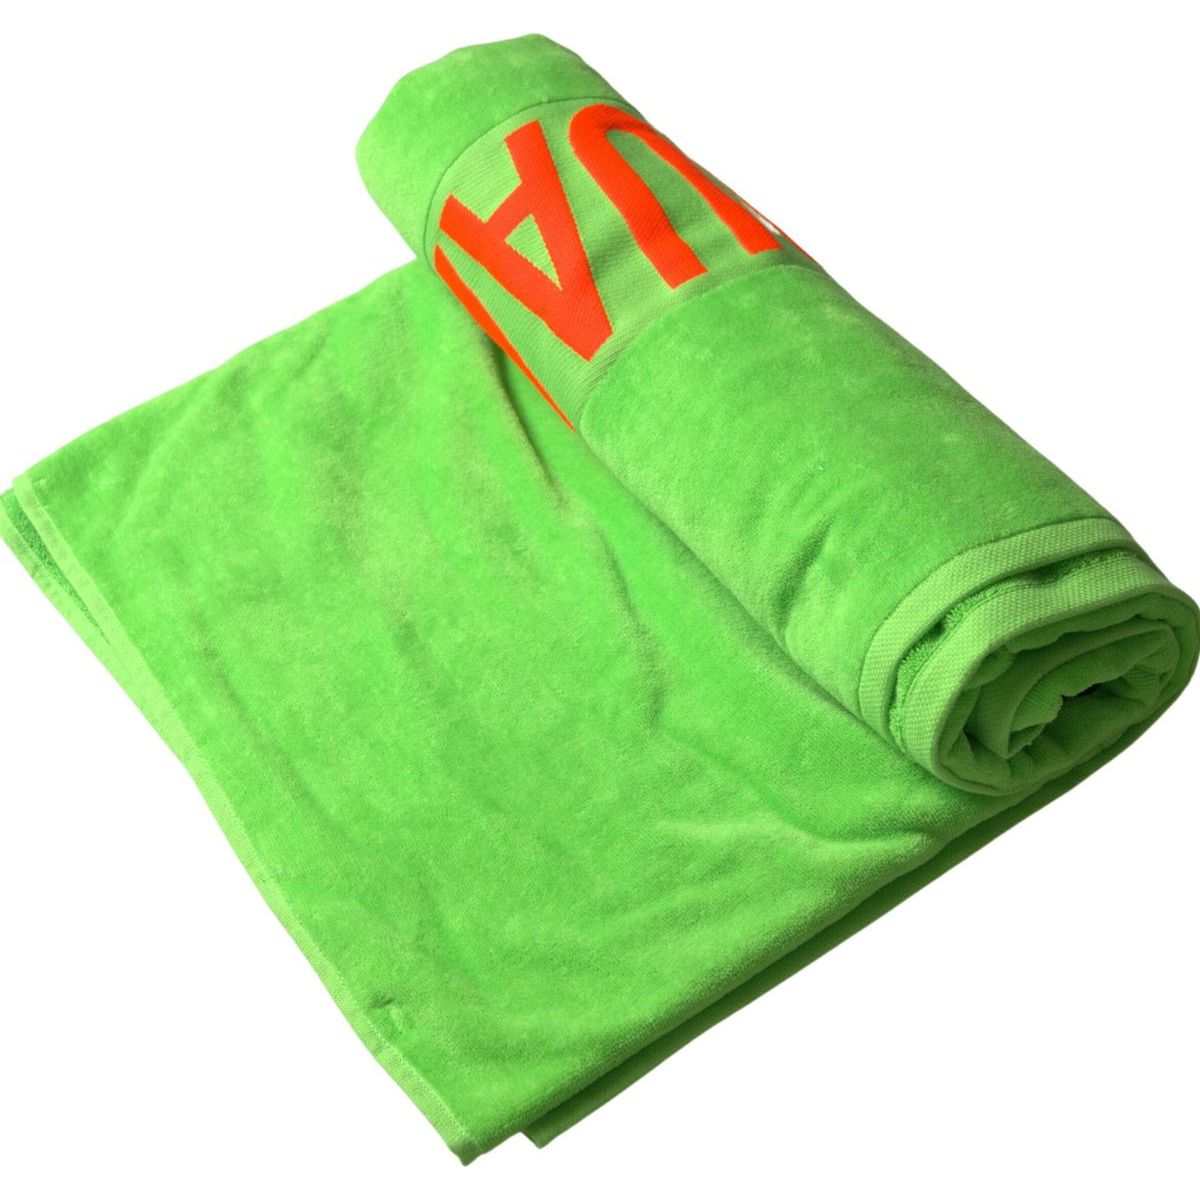 Dsquared² Chic Green Cotton Beach Towel green-logo-print-cotton-soft-unisex-beach-towel 465A4226-scaled-838fcfac-552_cce3e803-6672-40b1-bd64-93e9111cf256.jpg